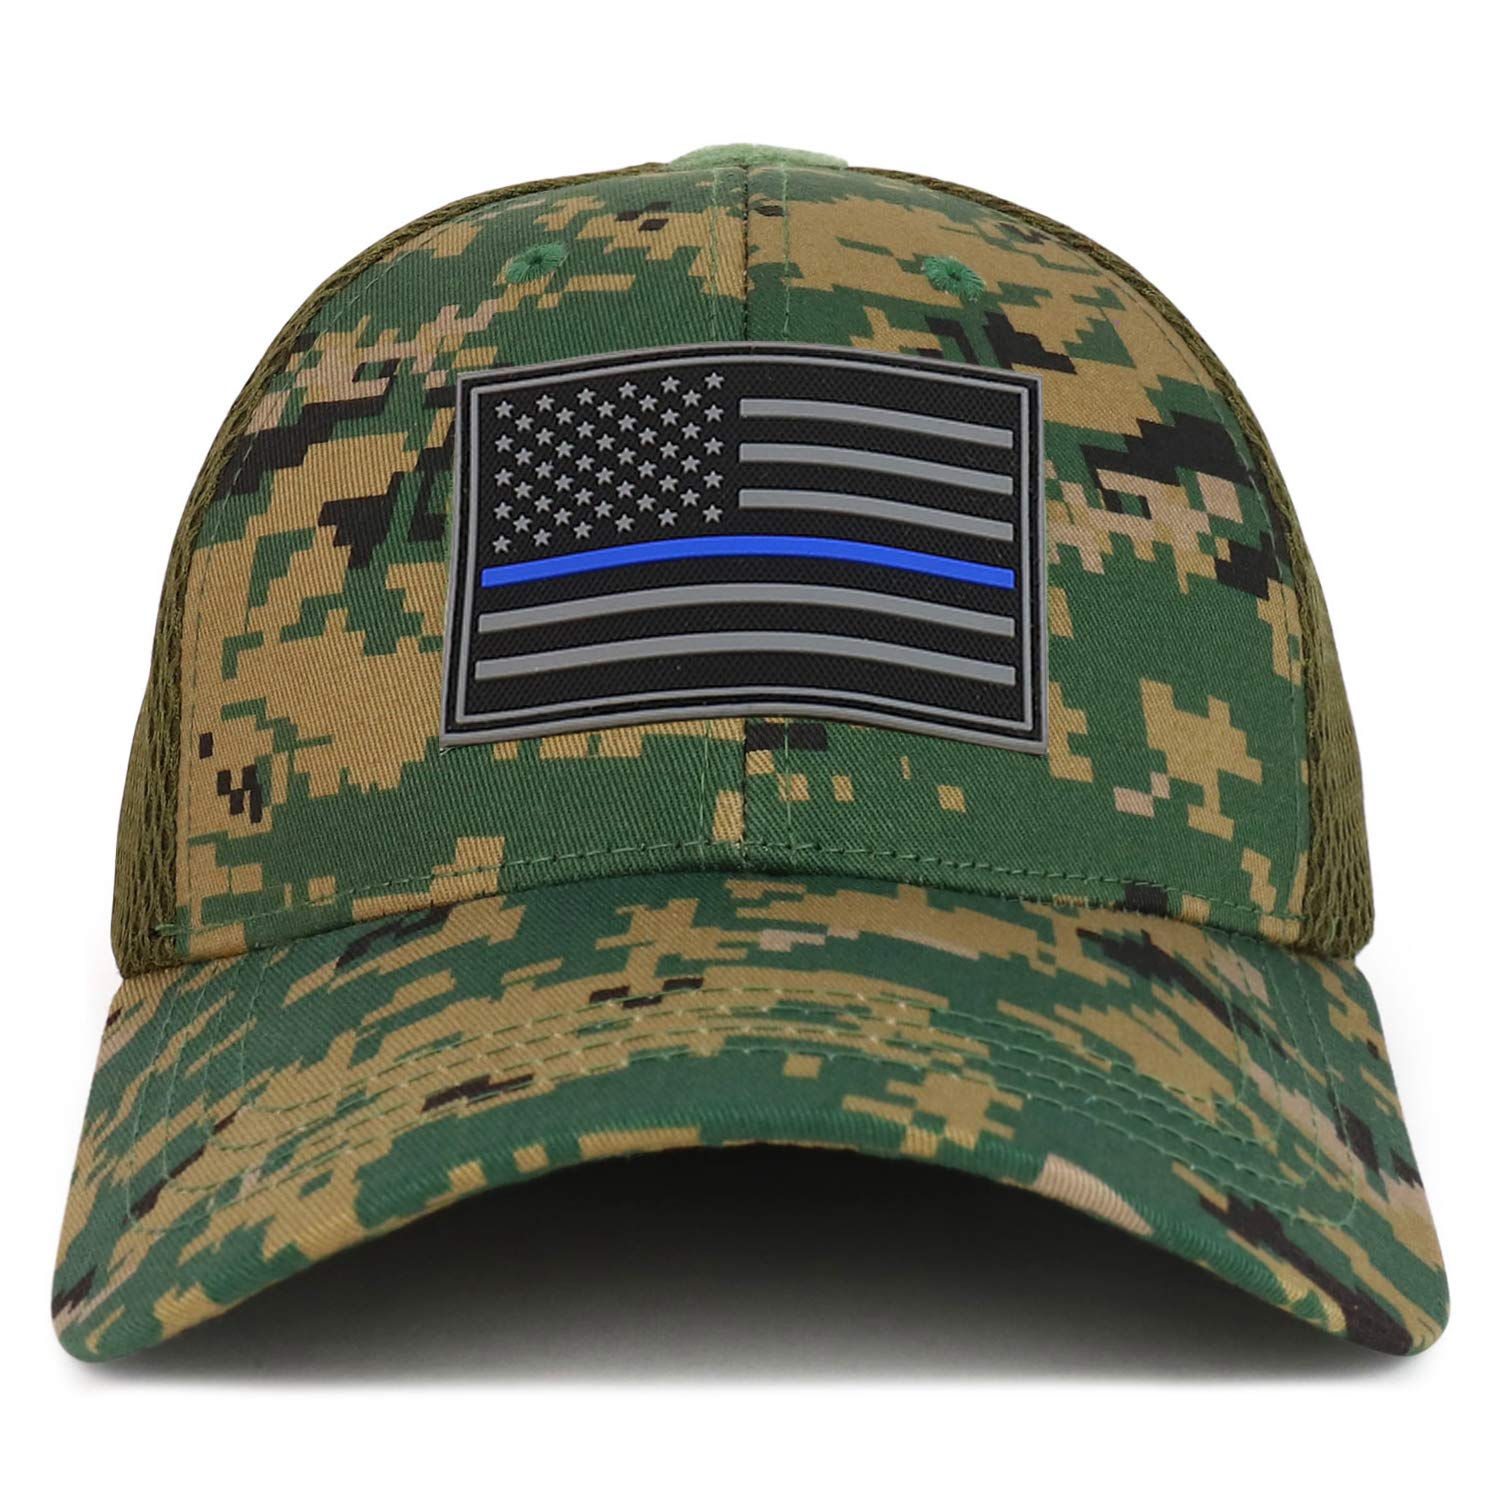 Armycrew Thin Blue Line American Flag 3D Rubber Tactical Patch Air Mesh Flex Cap